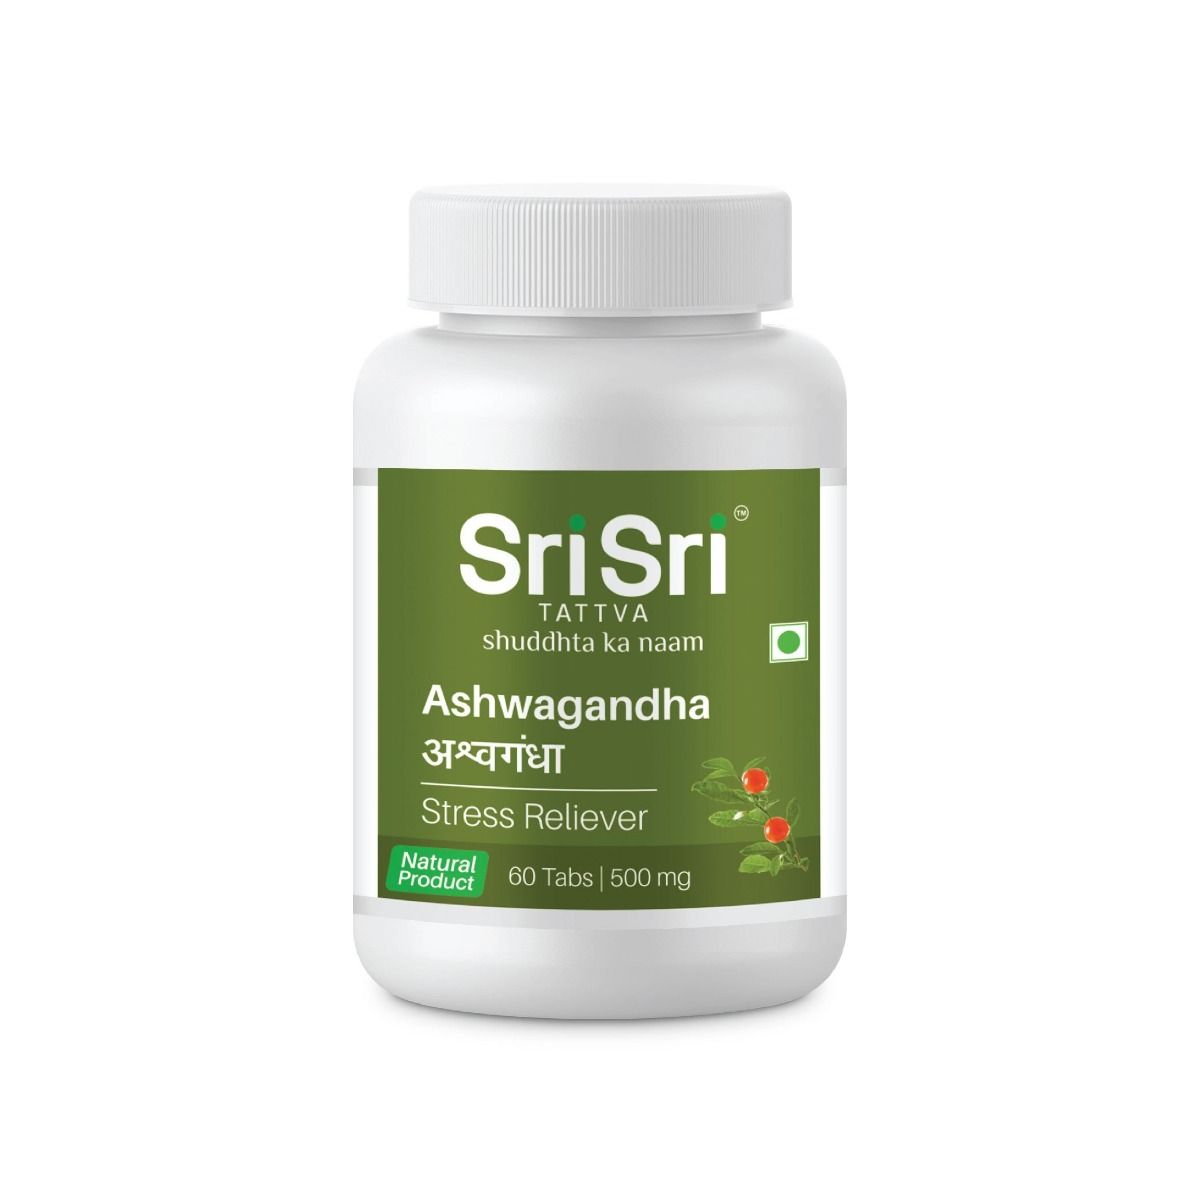 Sri Sri Tattva Ashwagandha 500 mg, 60 Tablets, Pack of 1 